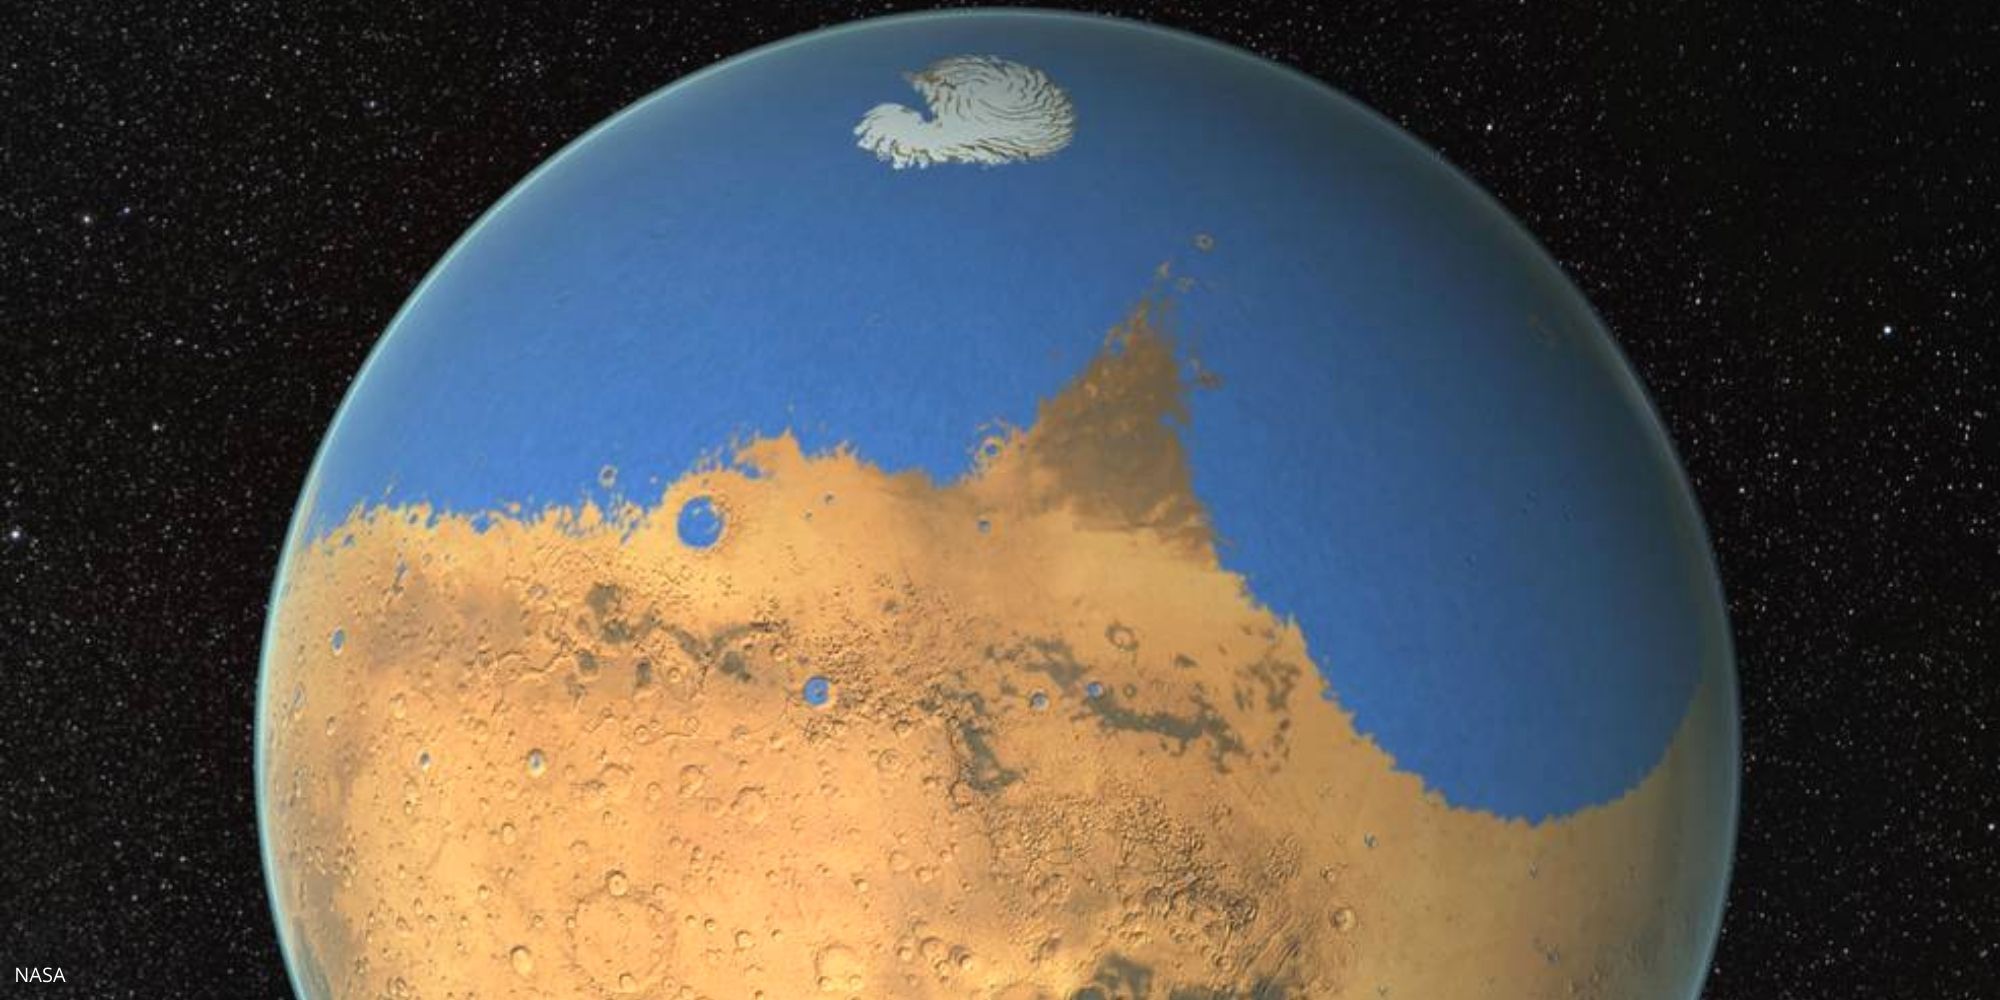 Water bodies on Mars